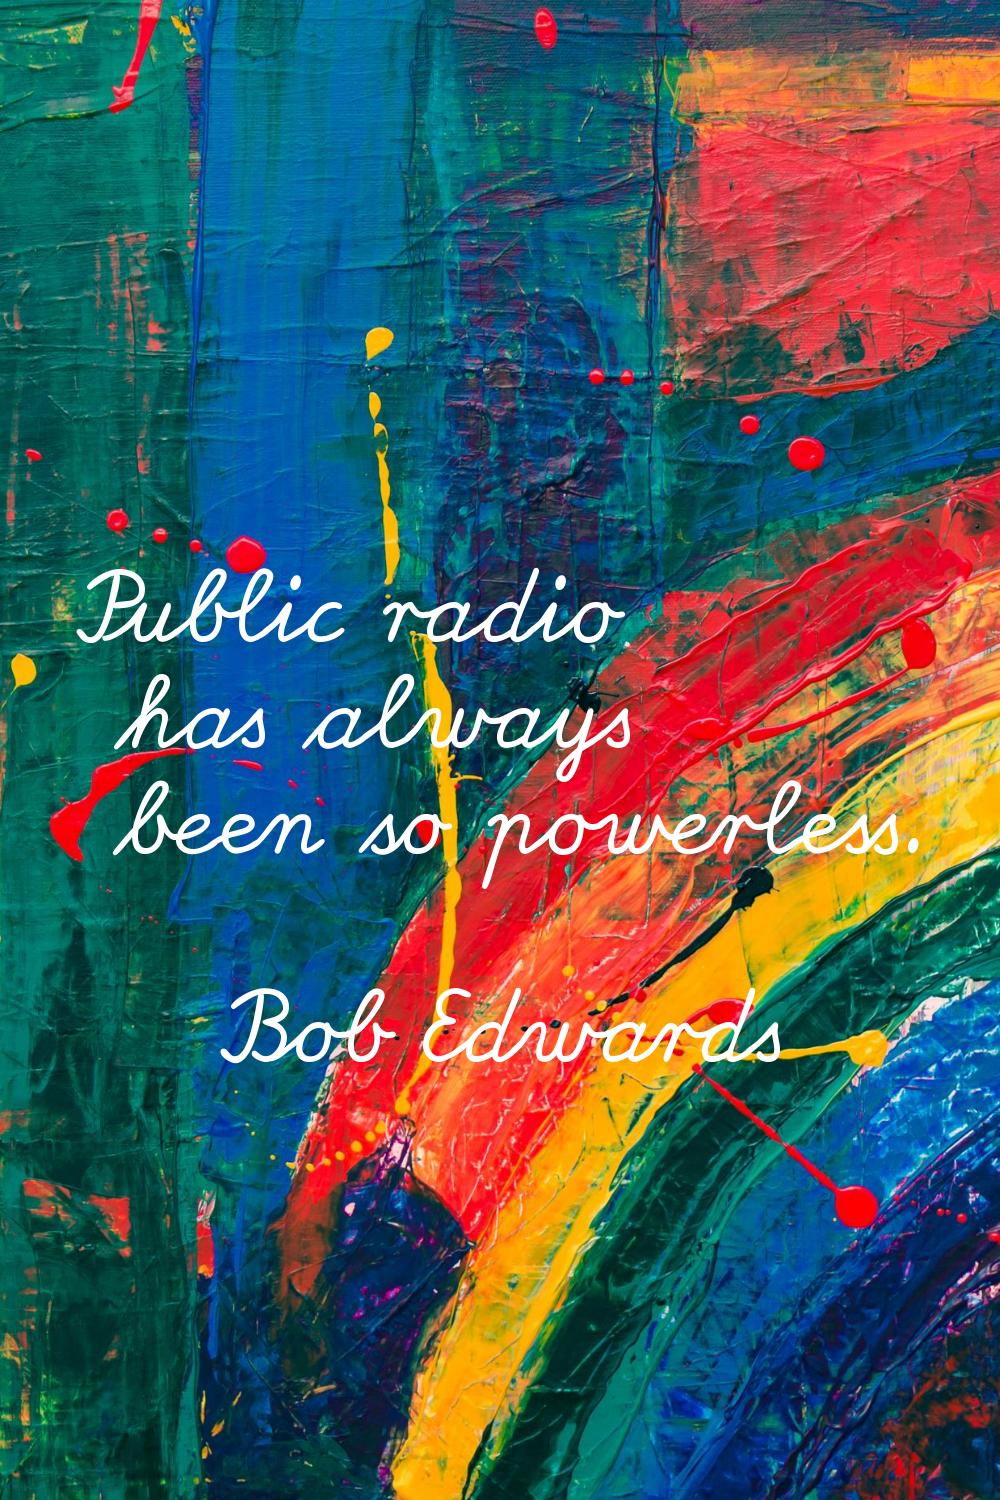 Public radio has always been so powerless.